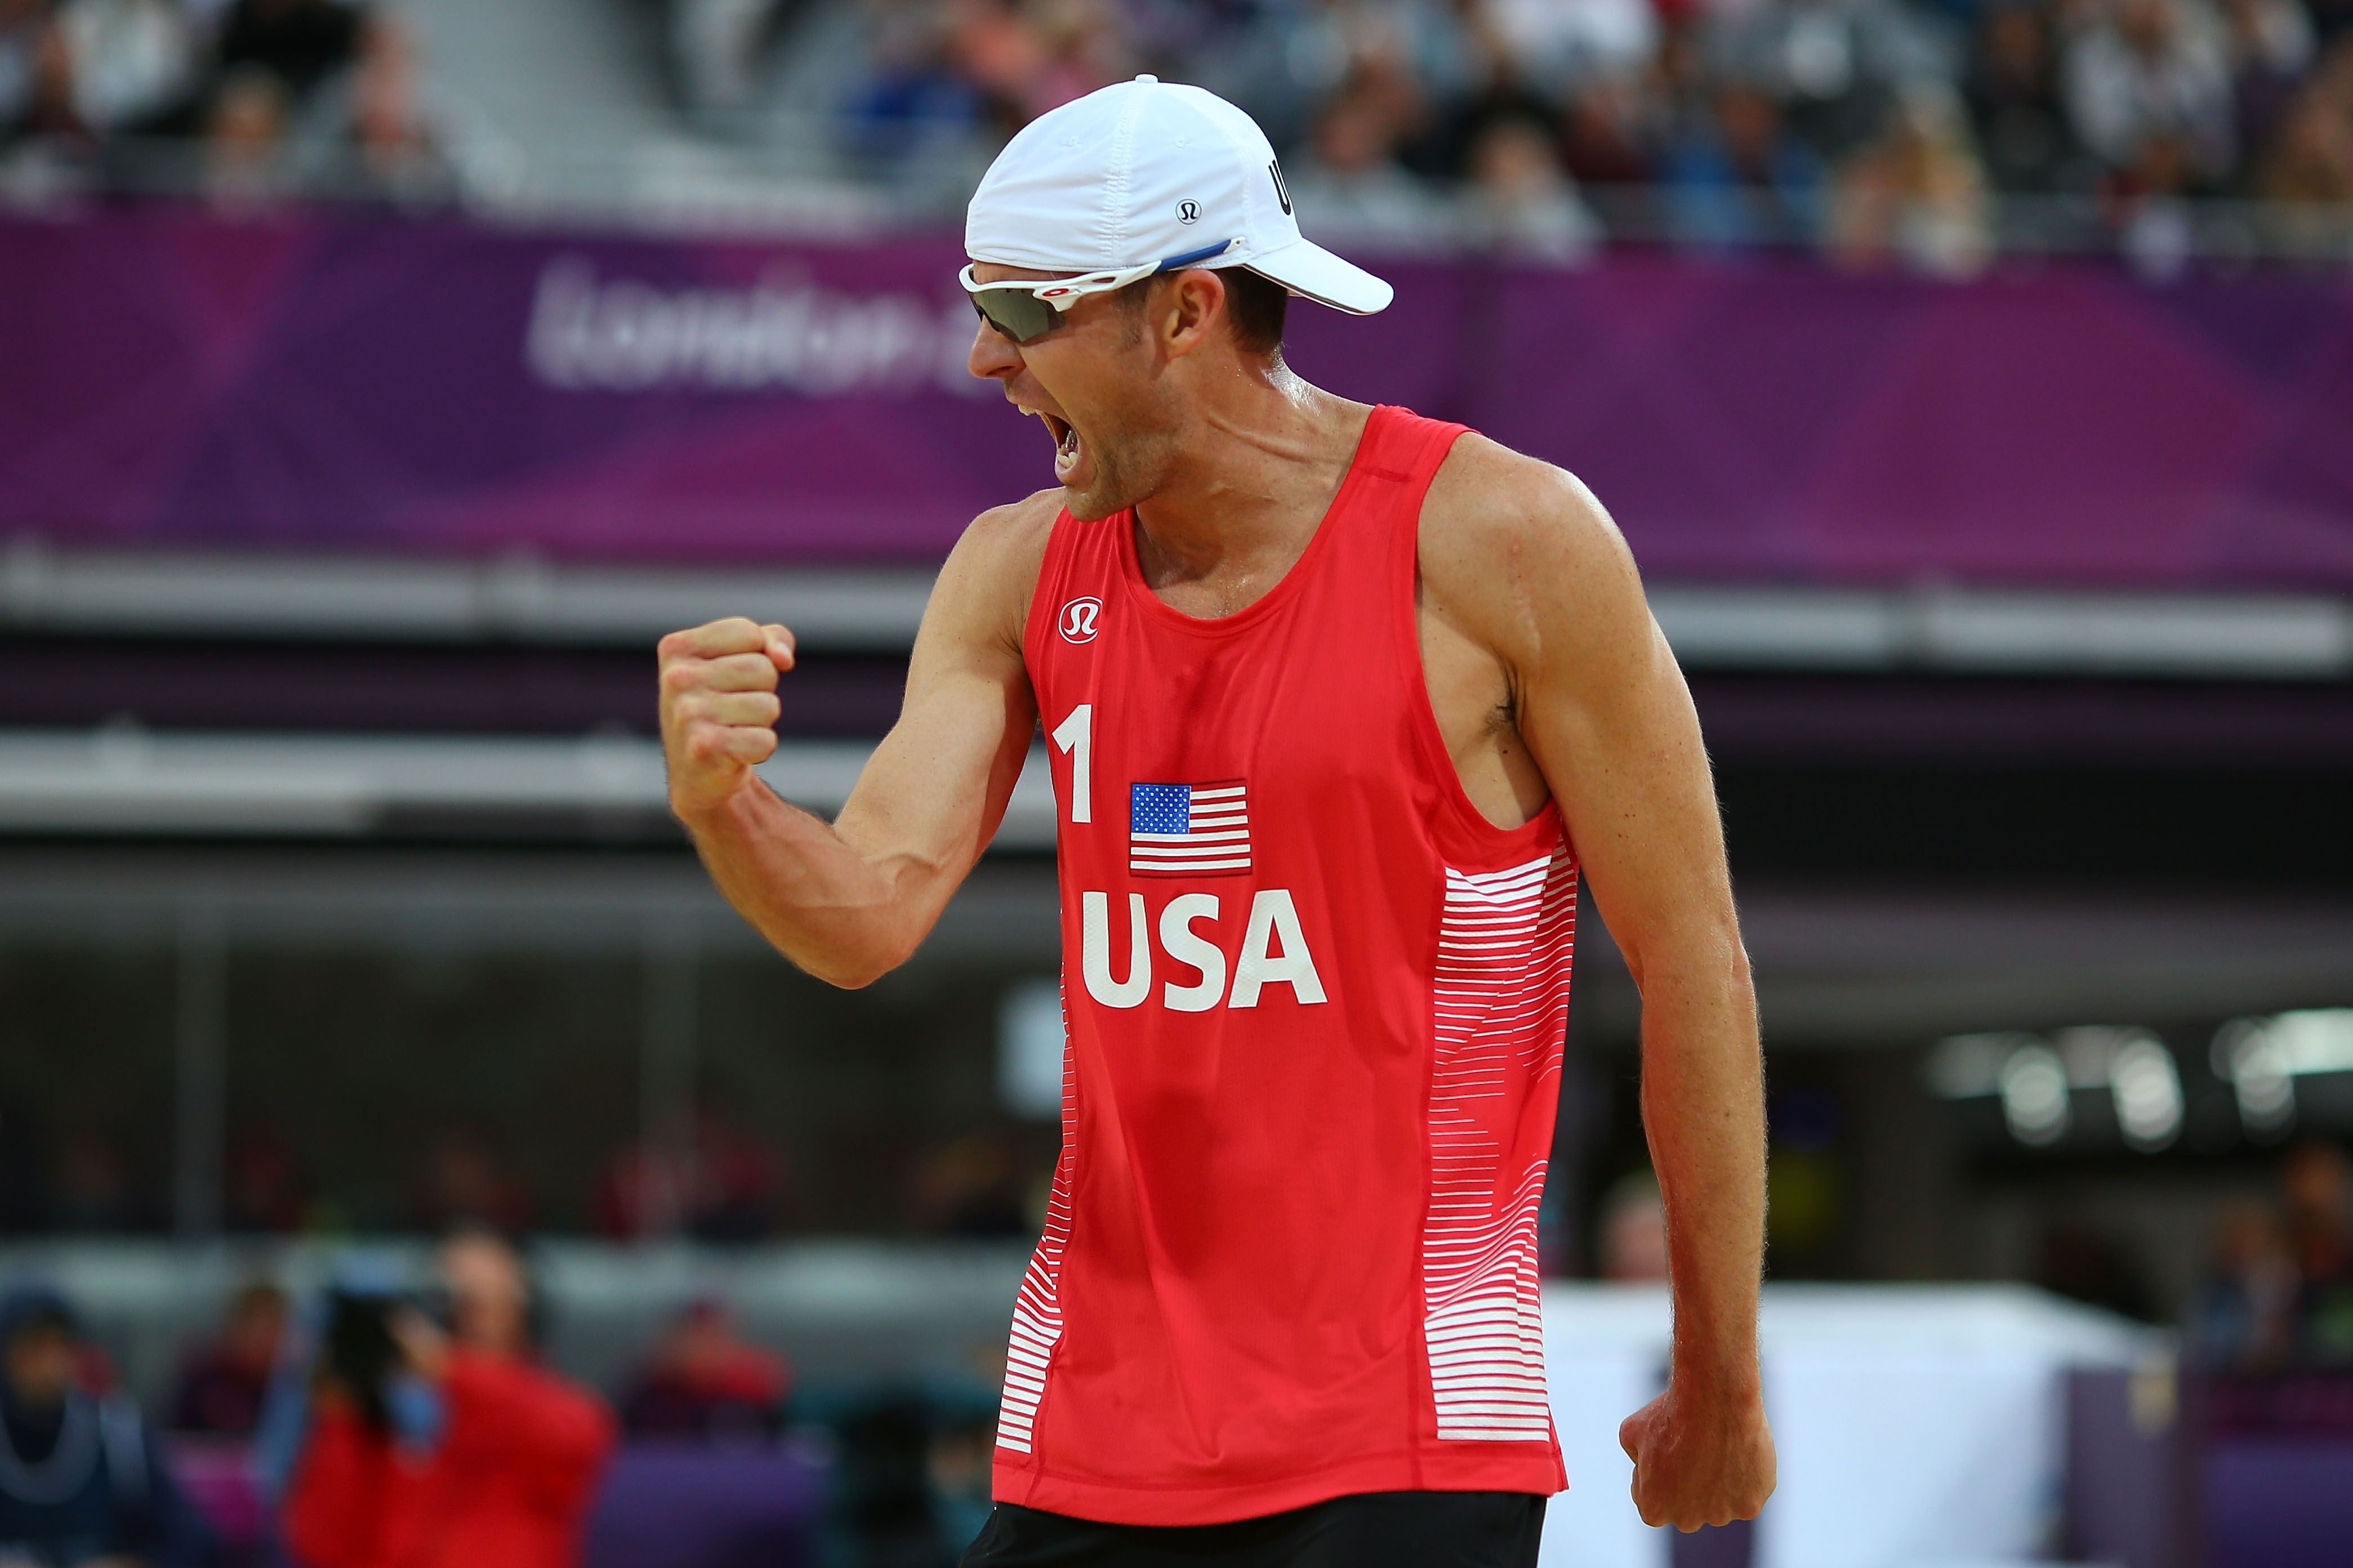 Jake Gibb, beach volleyball, 2016, Rio, Olympics